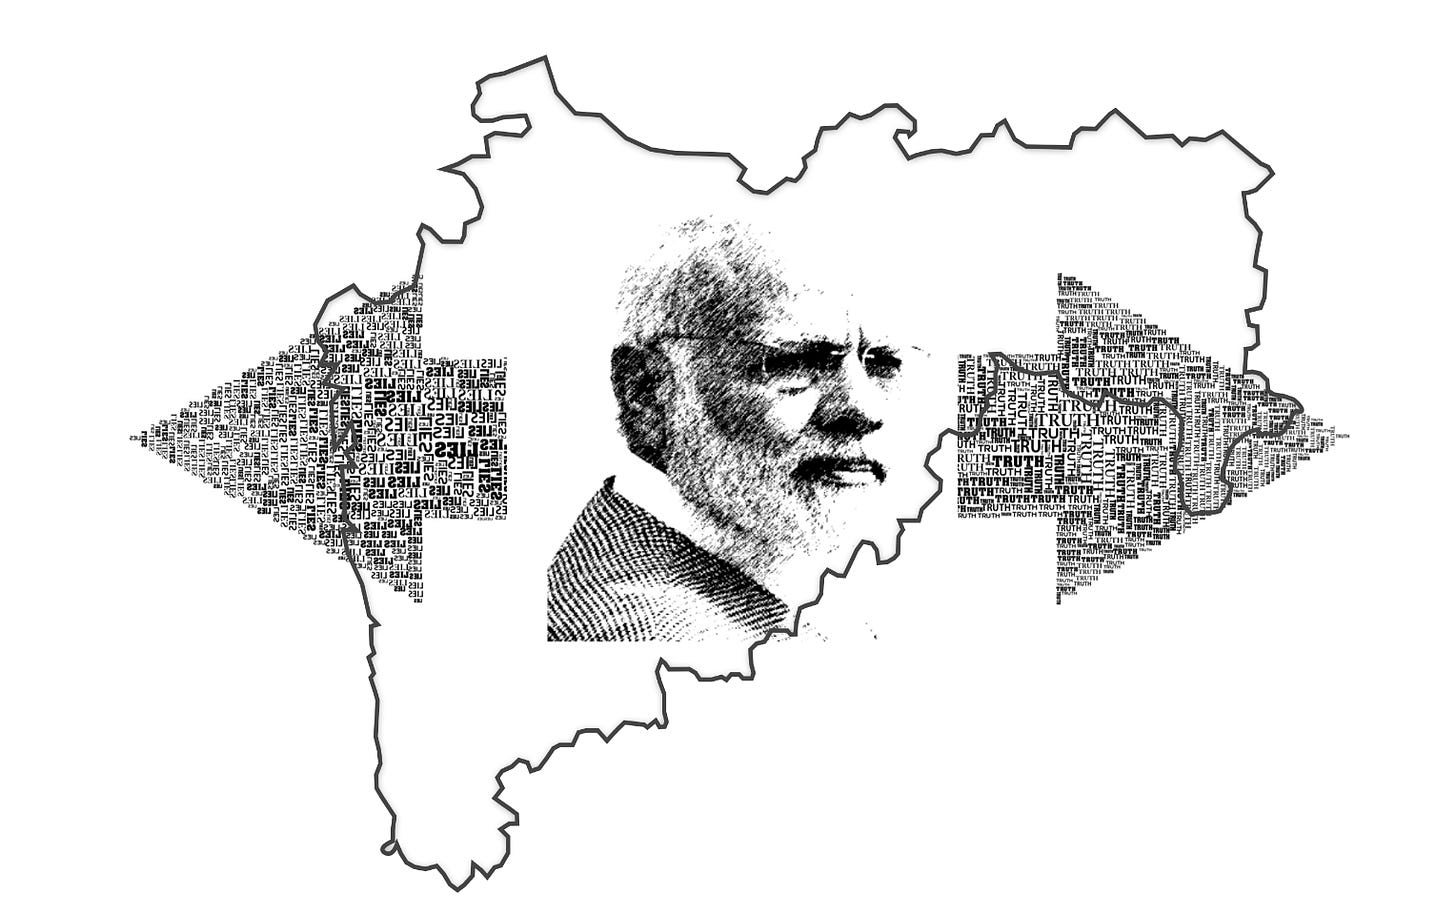 The Maharashtra Politics Mahatangle – a Strategic Post-Mortem